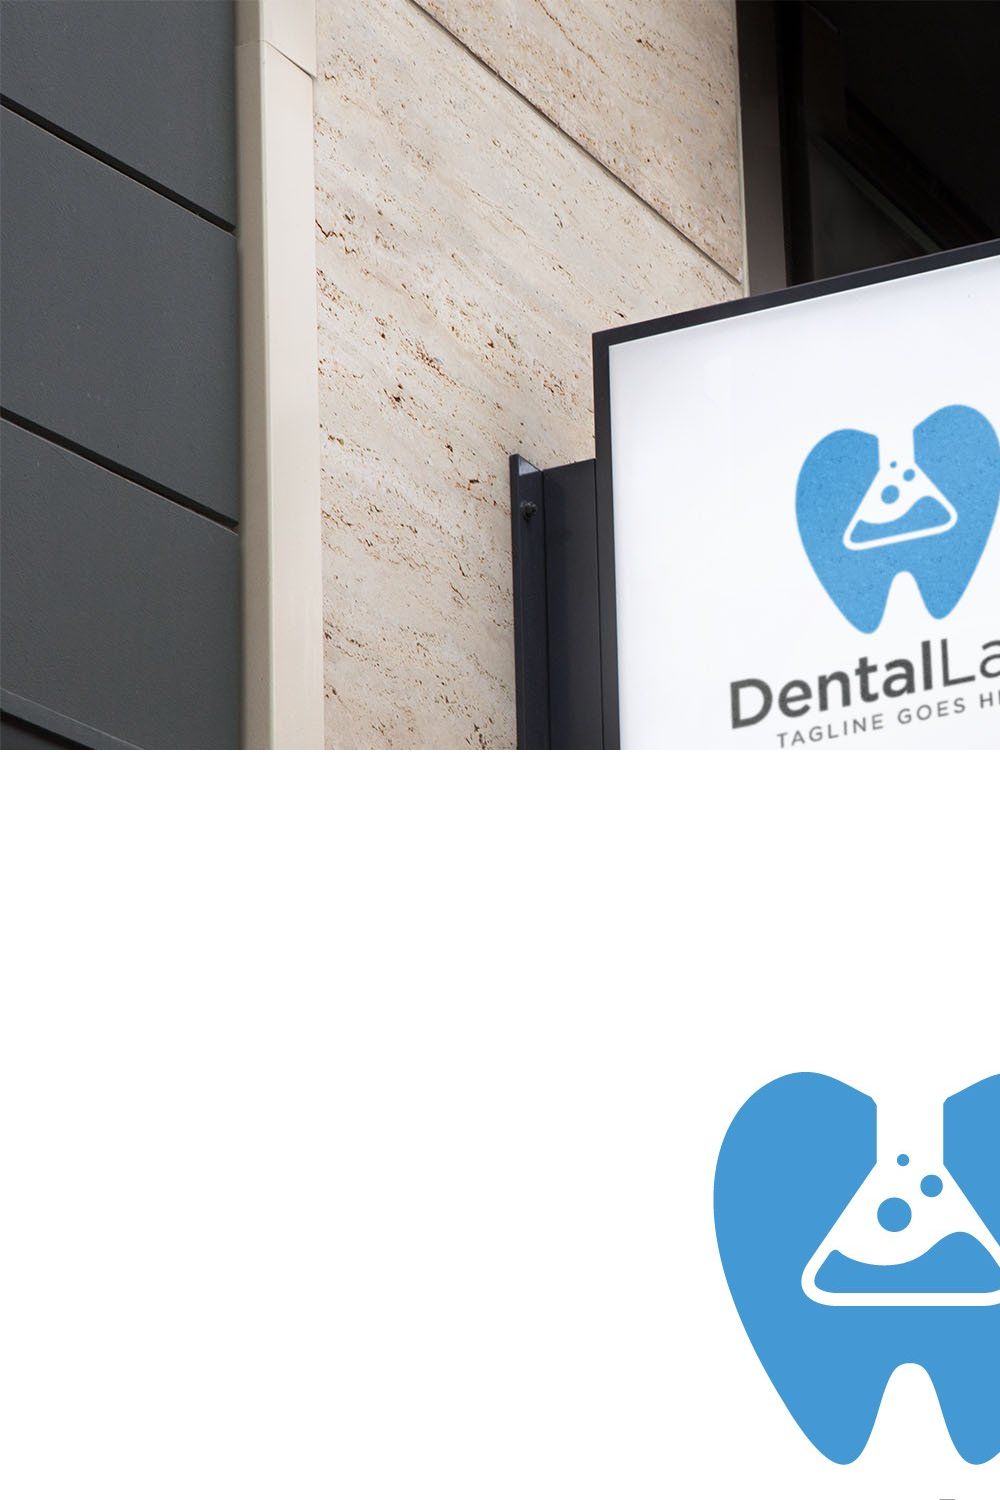 Dental Labs Logo pinterest preview image.